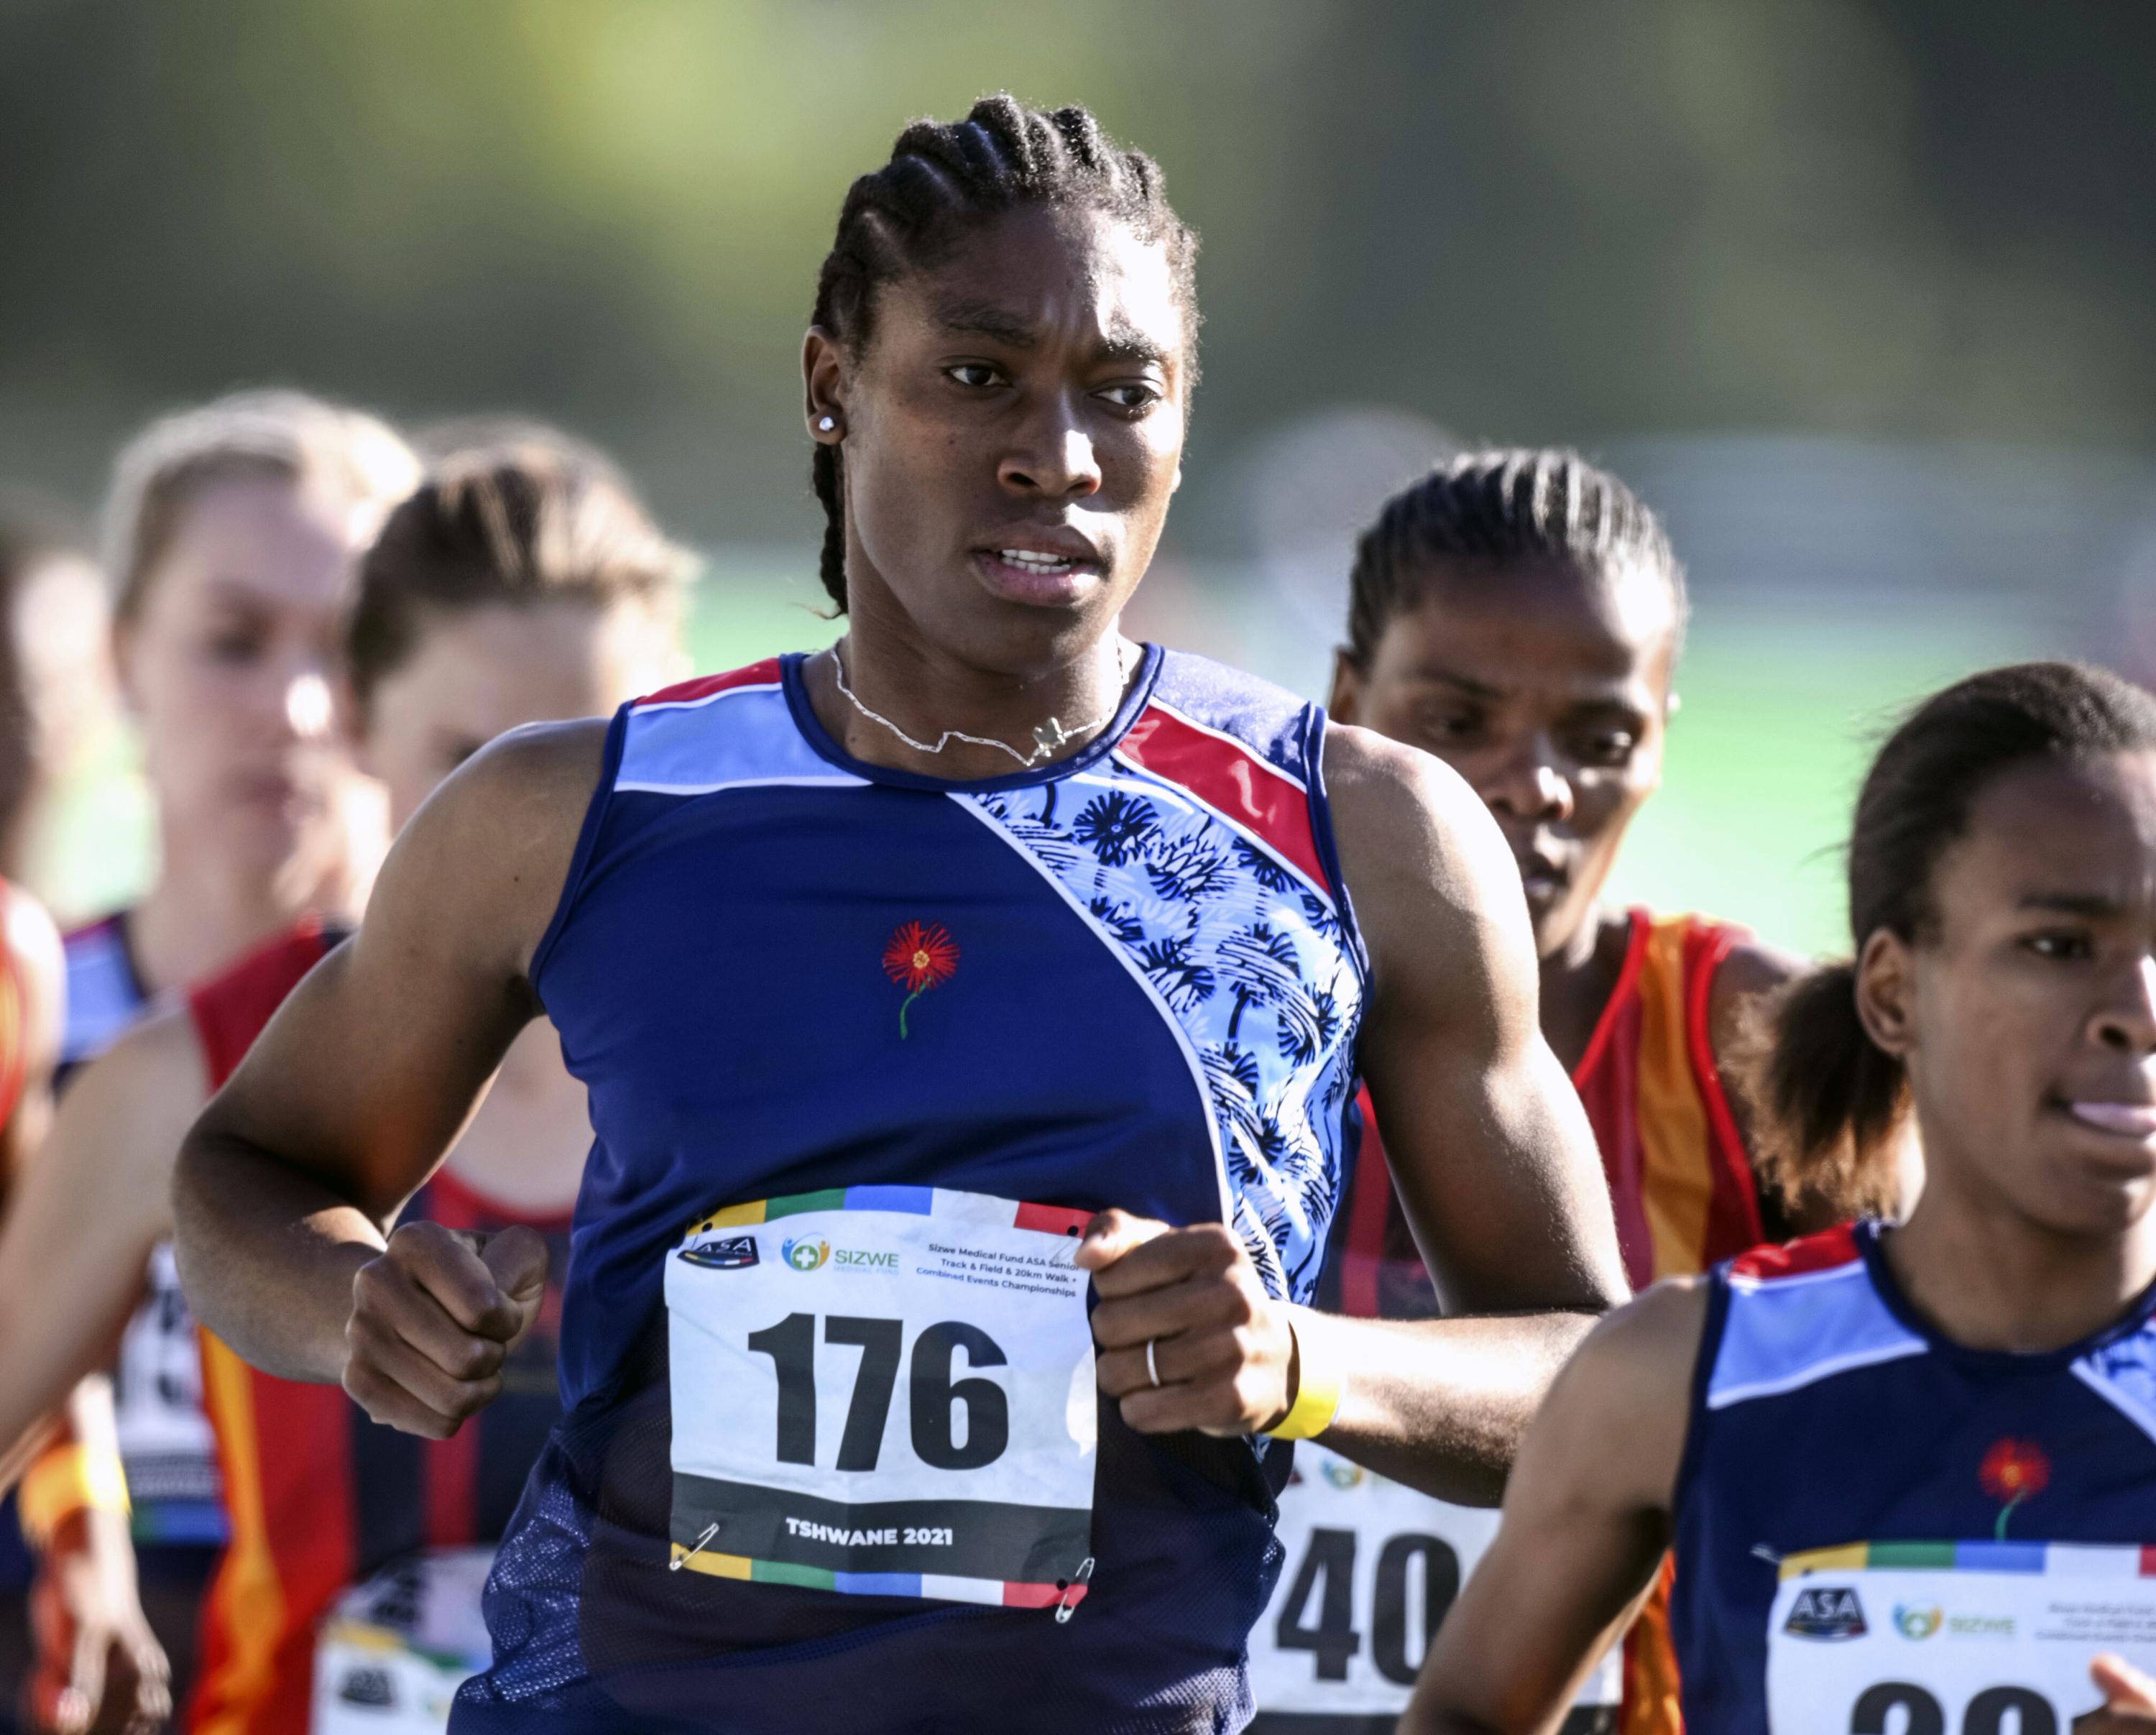 Women Are Dominating the Running WorldWomen Run More Races & Are